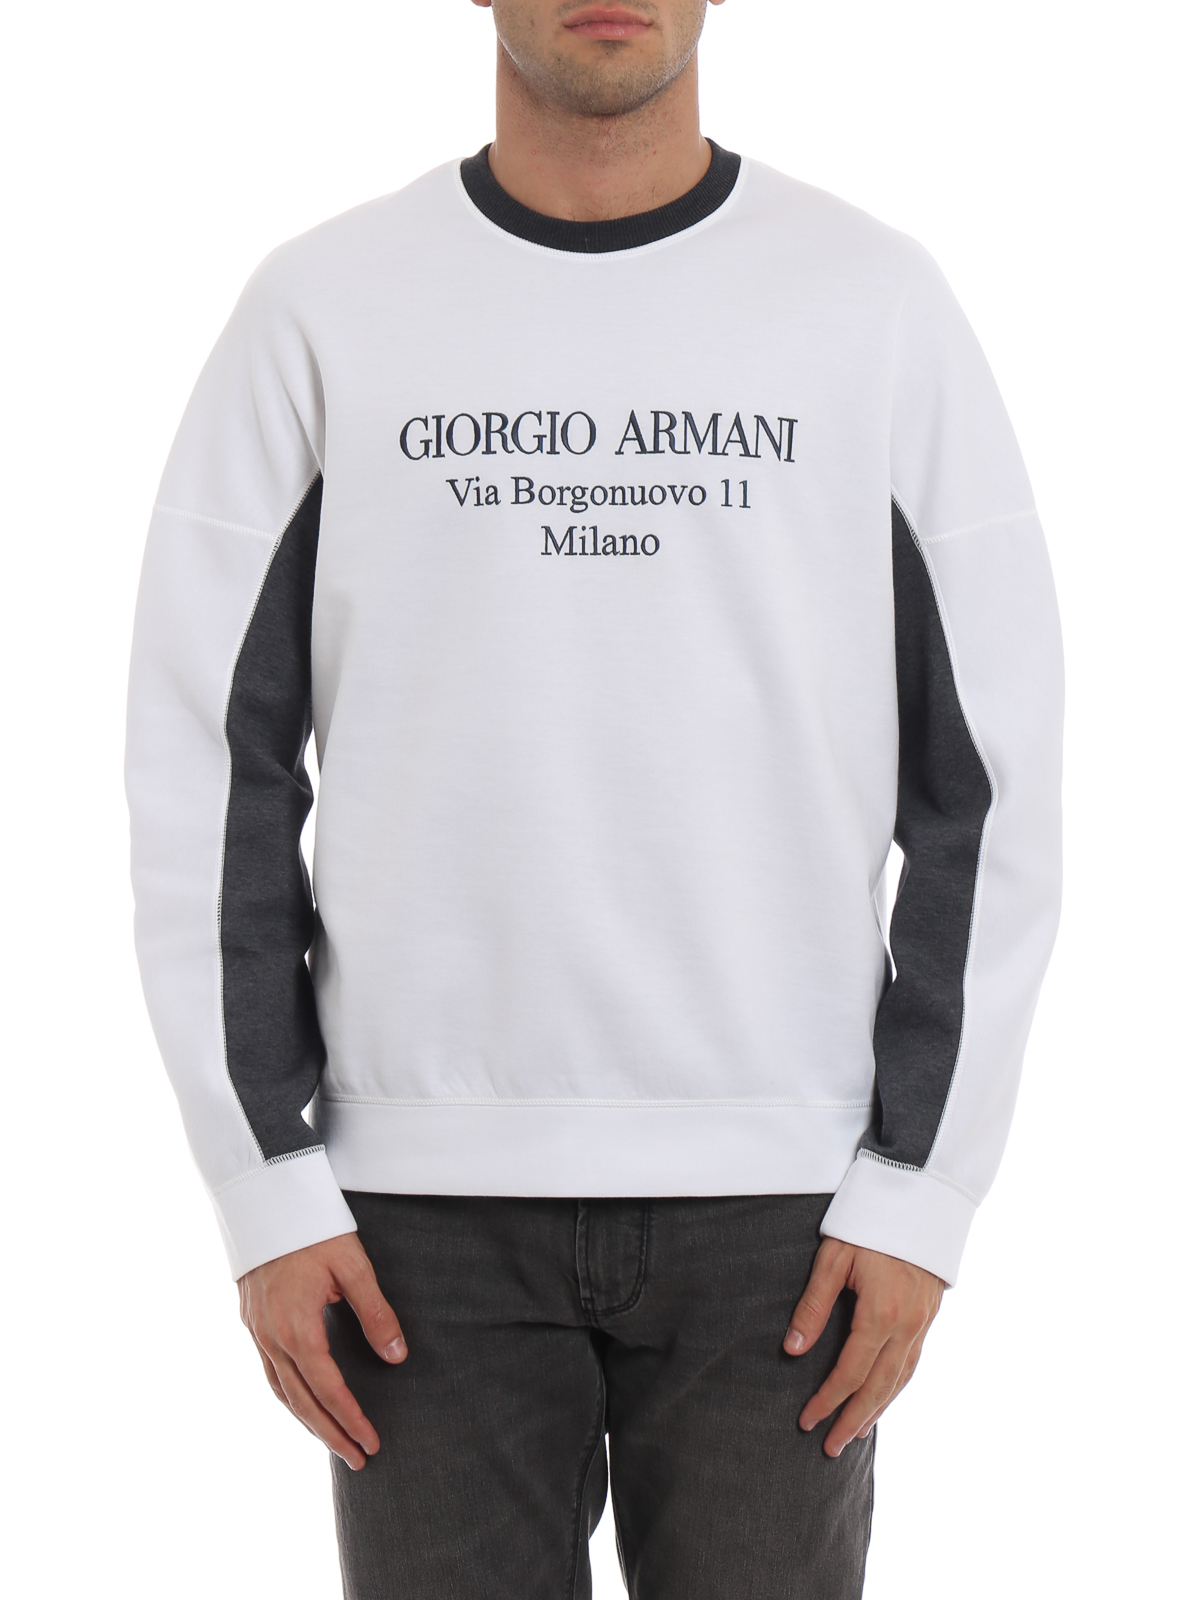 giorgio armani sweaters